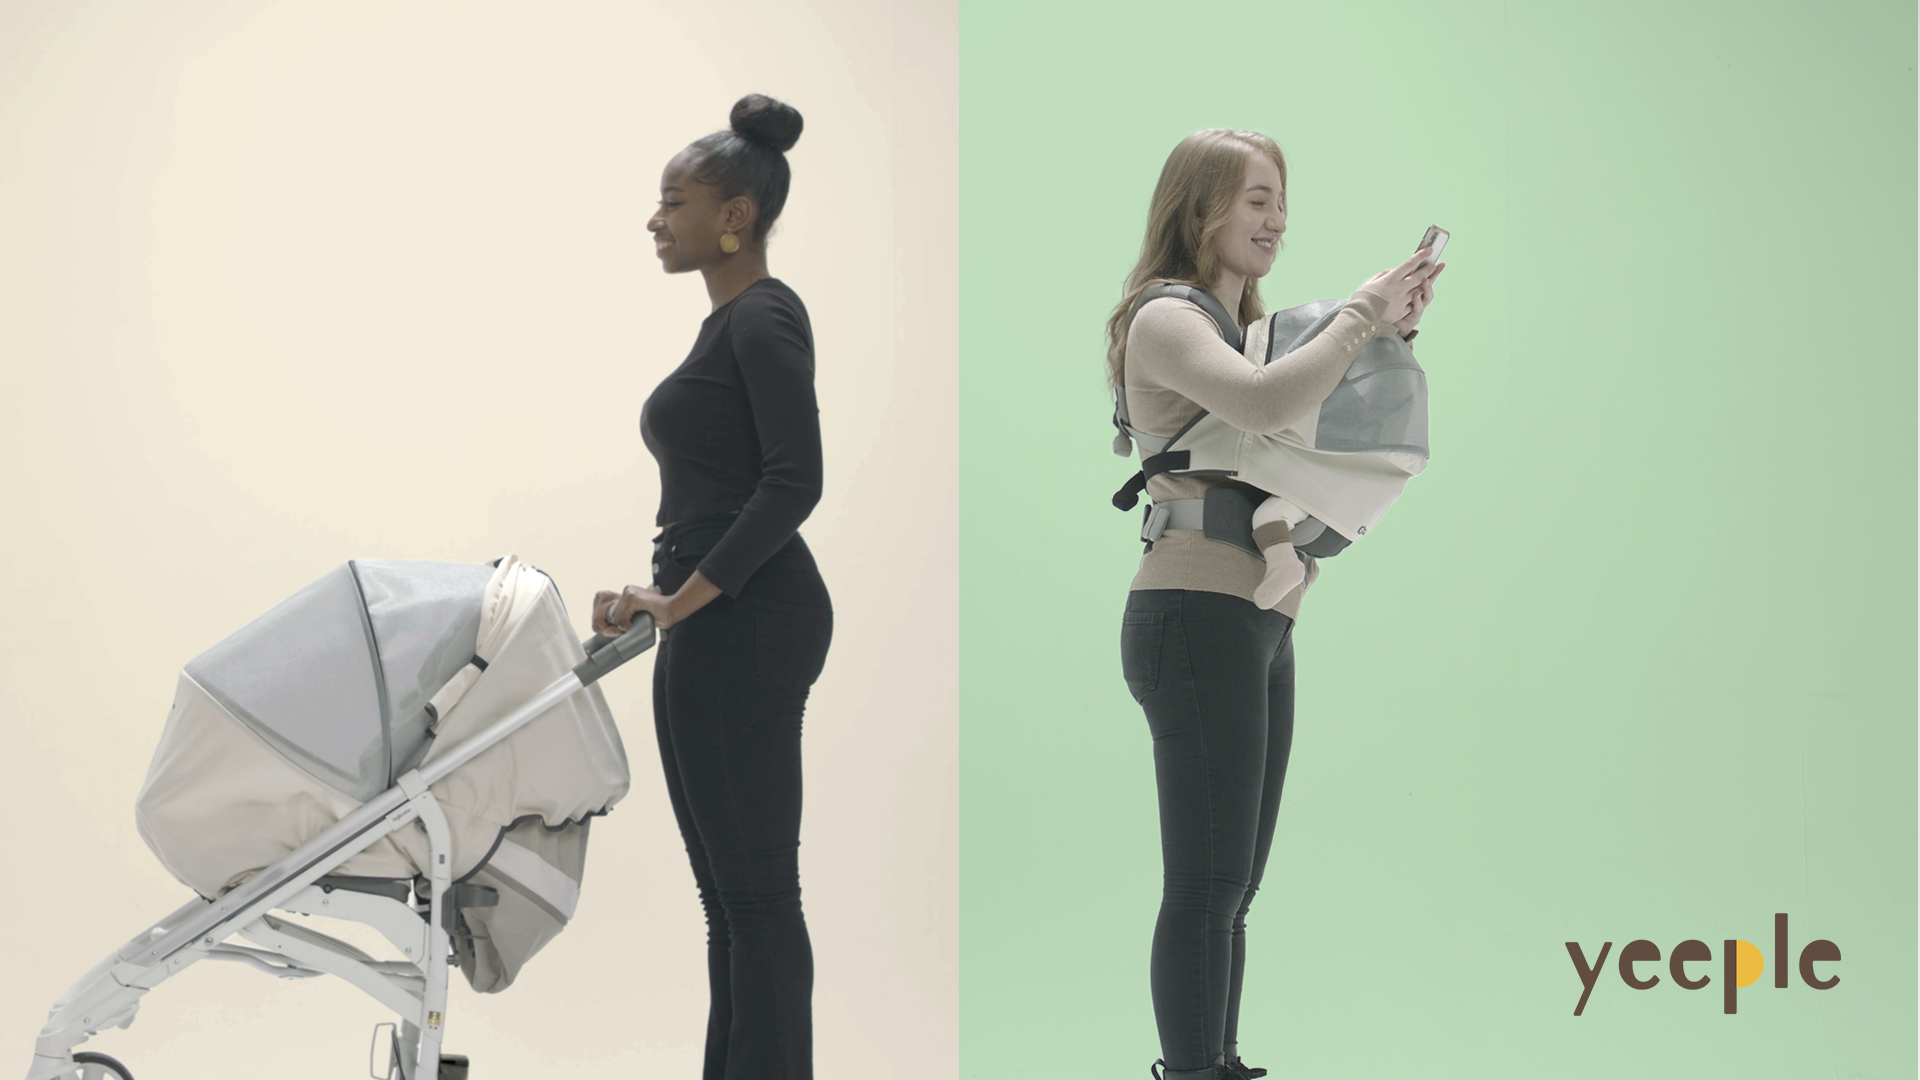 Yeeple Breathing Baby Shield To Launch On Kickstarter